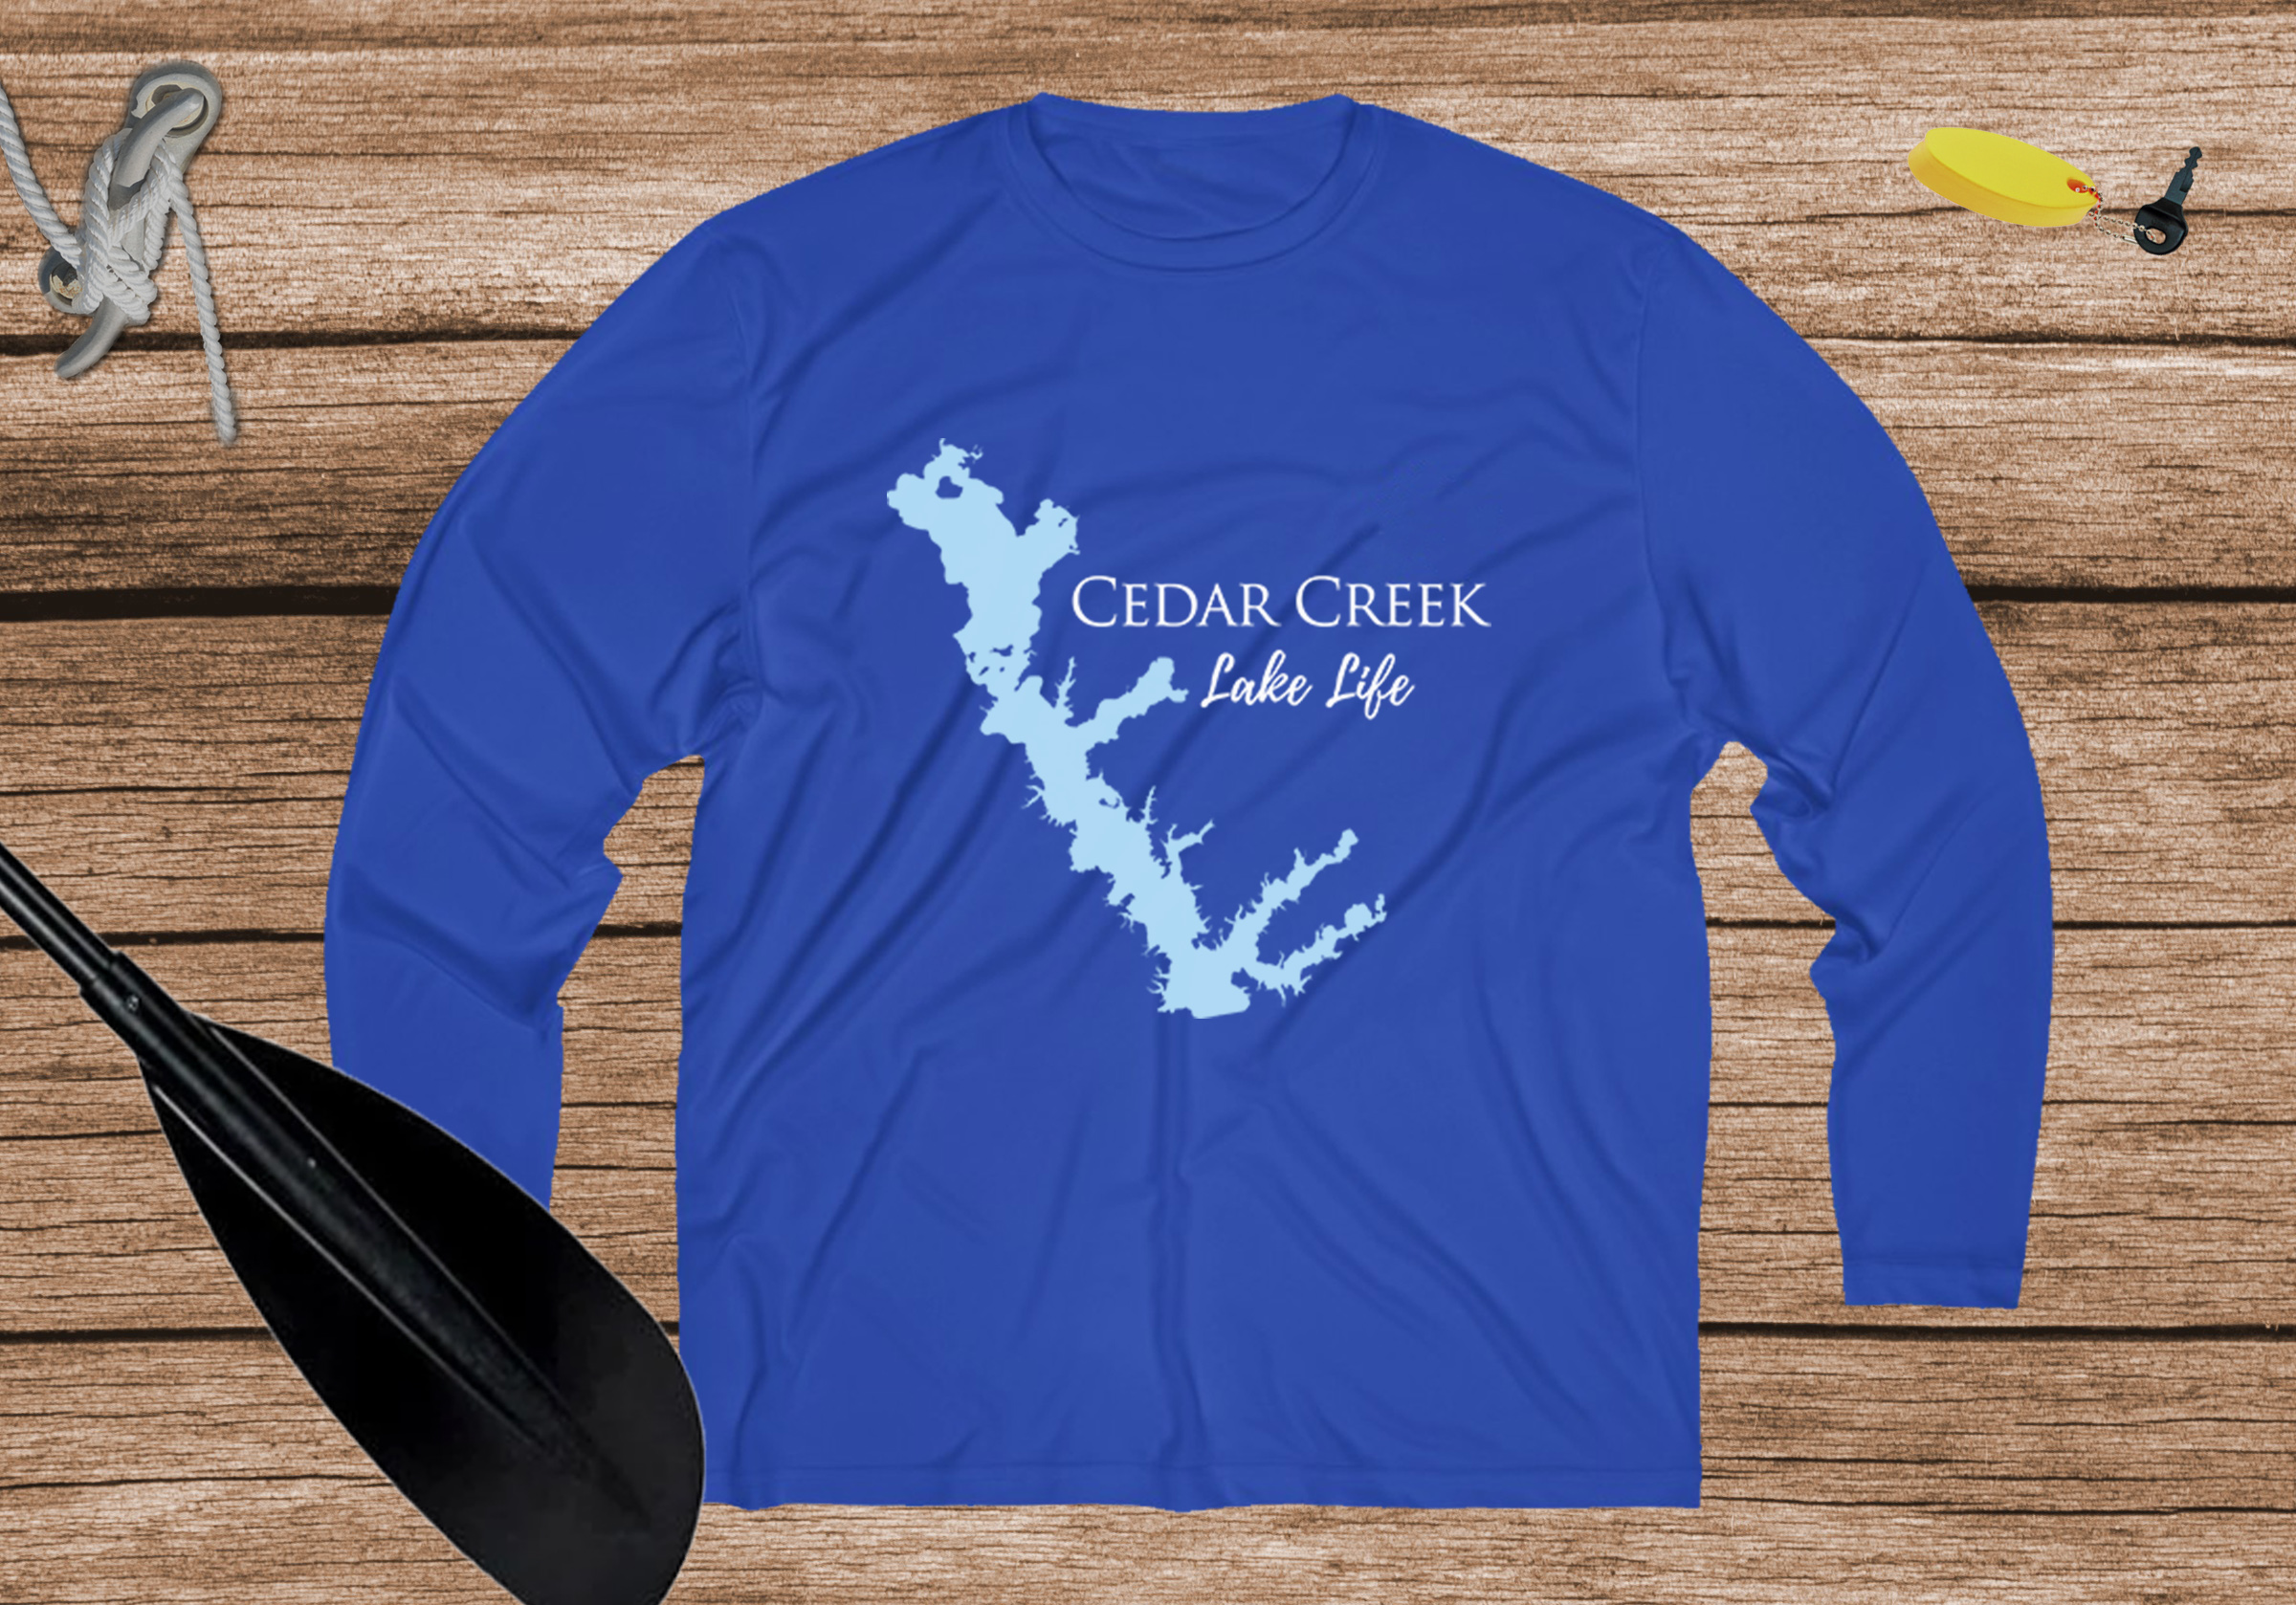 Cedar Creek Lake Life Dri-fit Boating Shirt - Breathable Material- Men's Long Sleeve Moisture Wicking Tee - Texas Lake